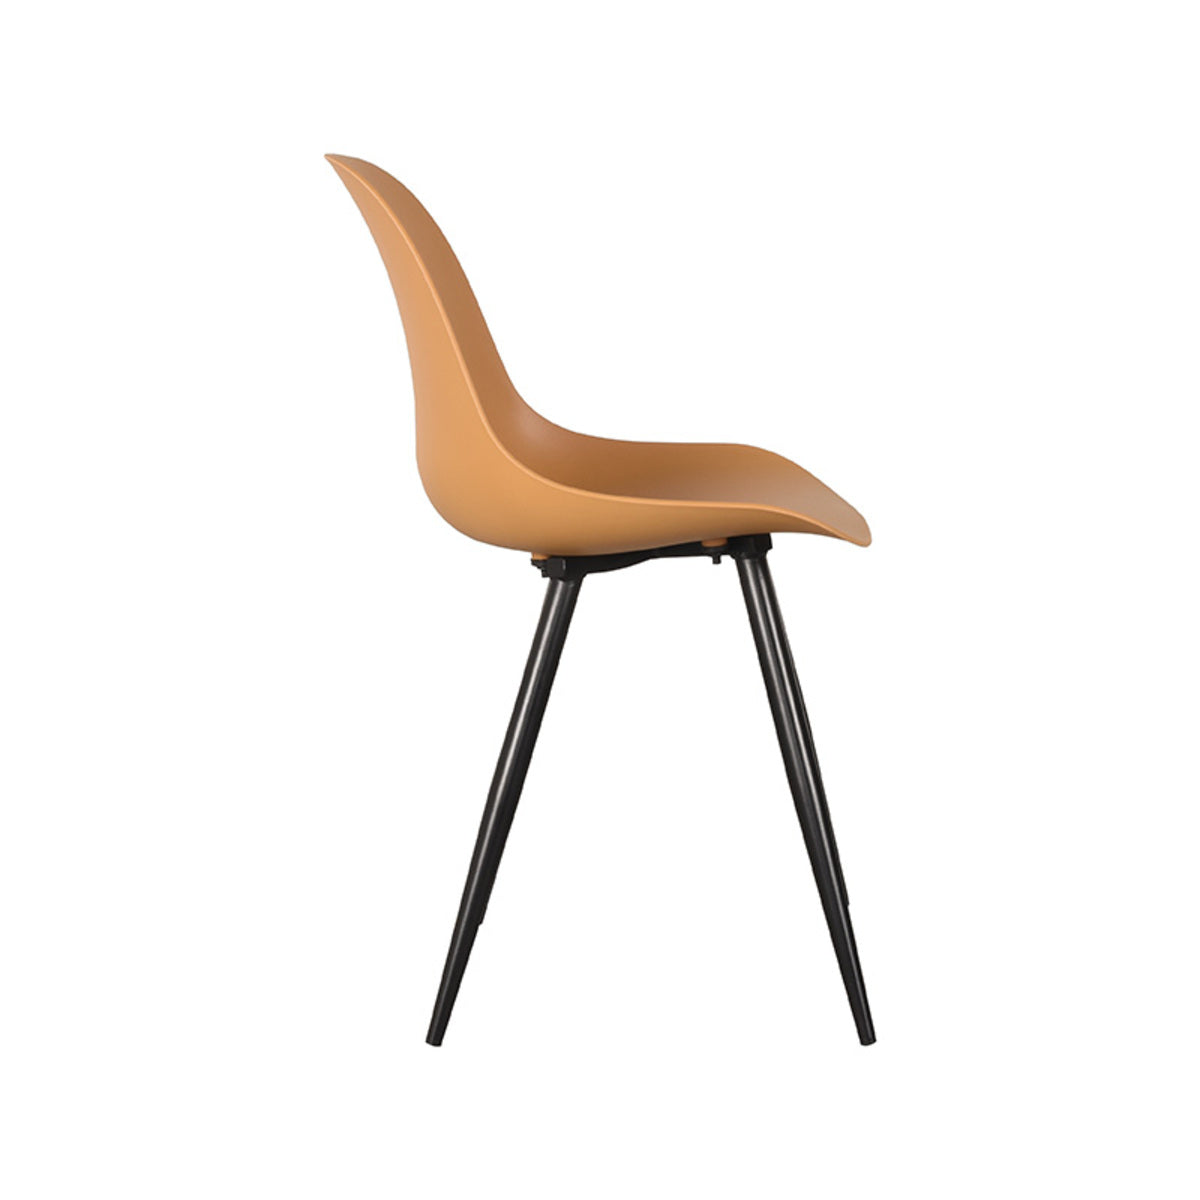 LABEL51 Dining room chair Monza - Ocher - Plastic | 2 pcs